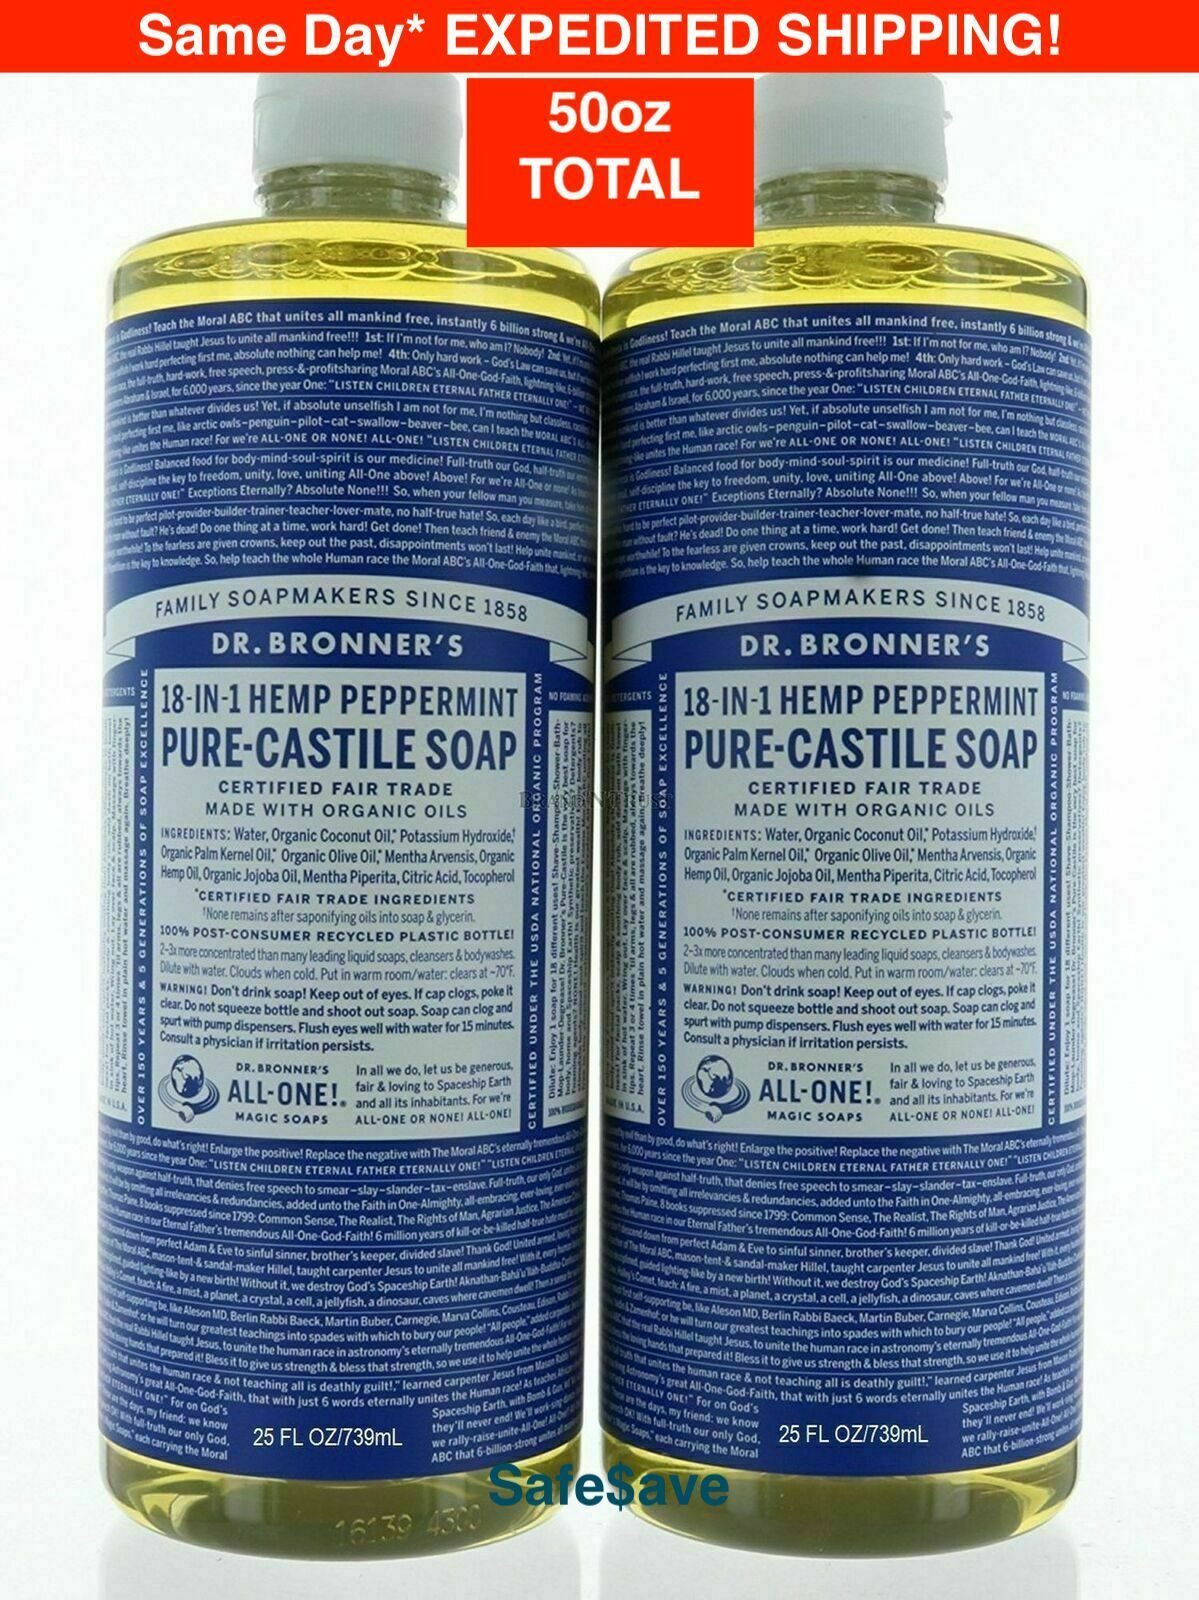 50 Oz Dr. Bronner's Pure Castile Soap18-in-1 Peppermint 2 Packs Total 50 Oz